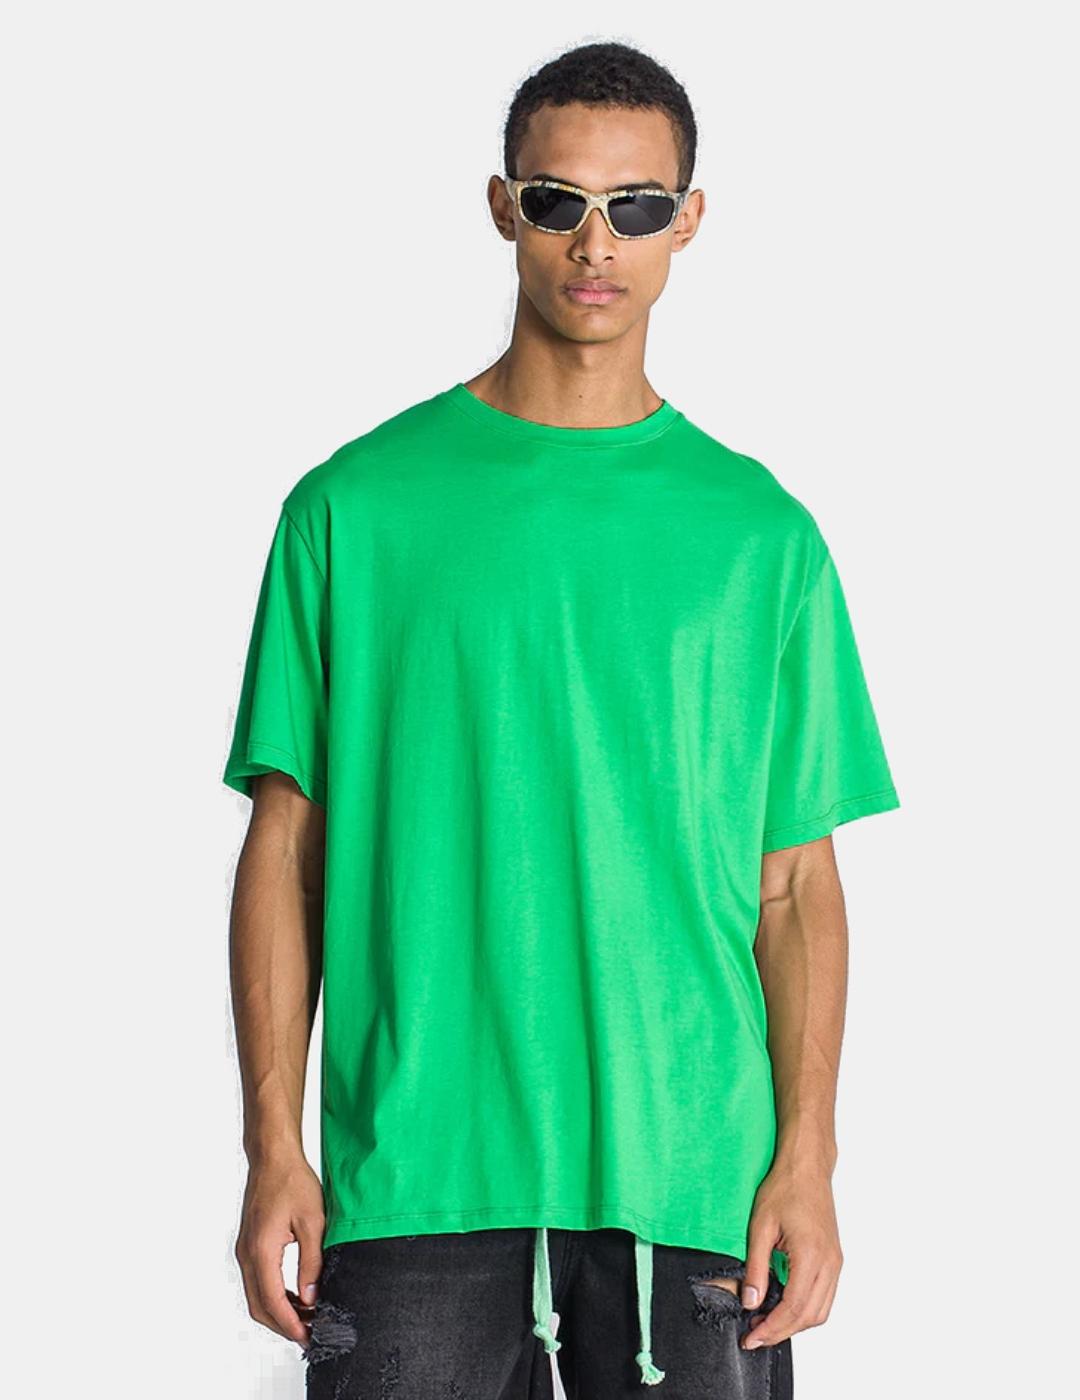 Camiseta Gianni Kavanagh Lotus verde para hombre